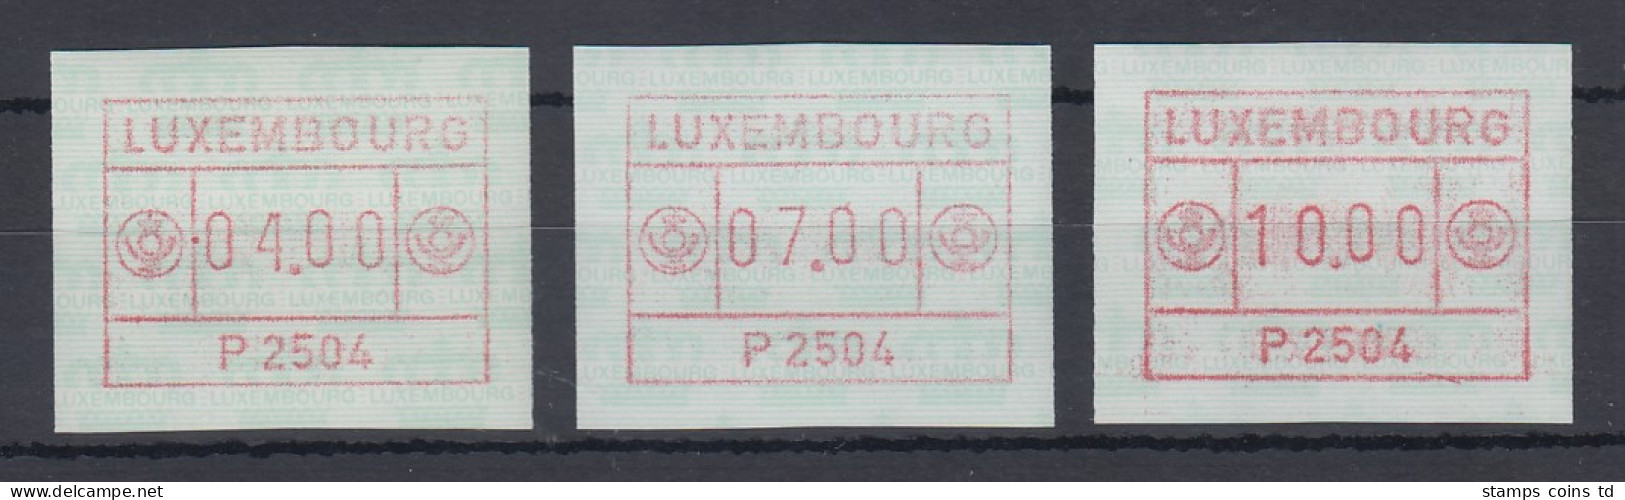 Luxemburg ATM P2504 Tastensatz 4-7-10 ** - Frankeervignetten